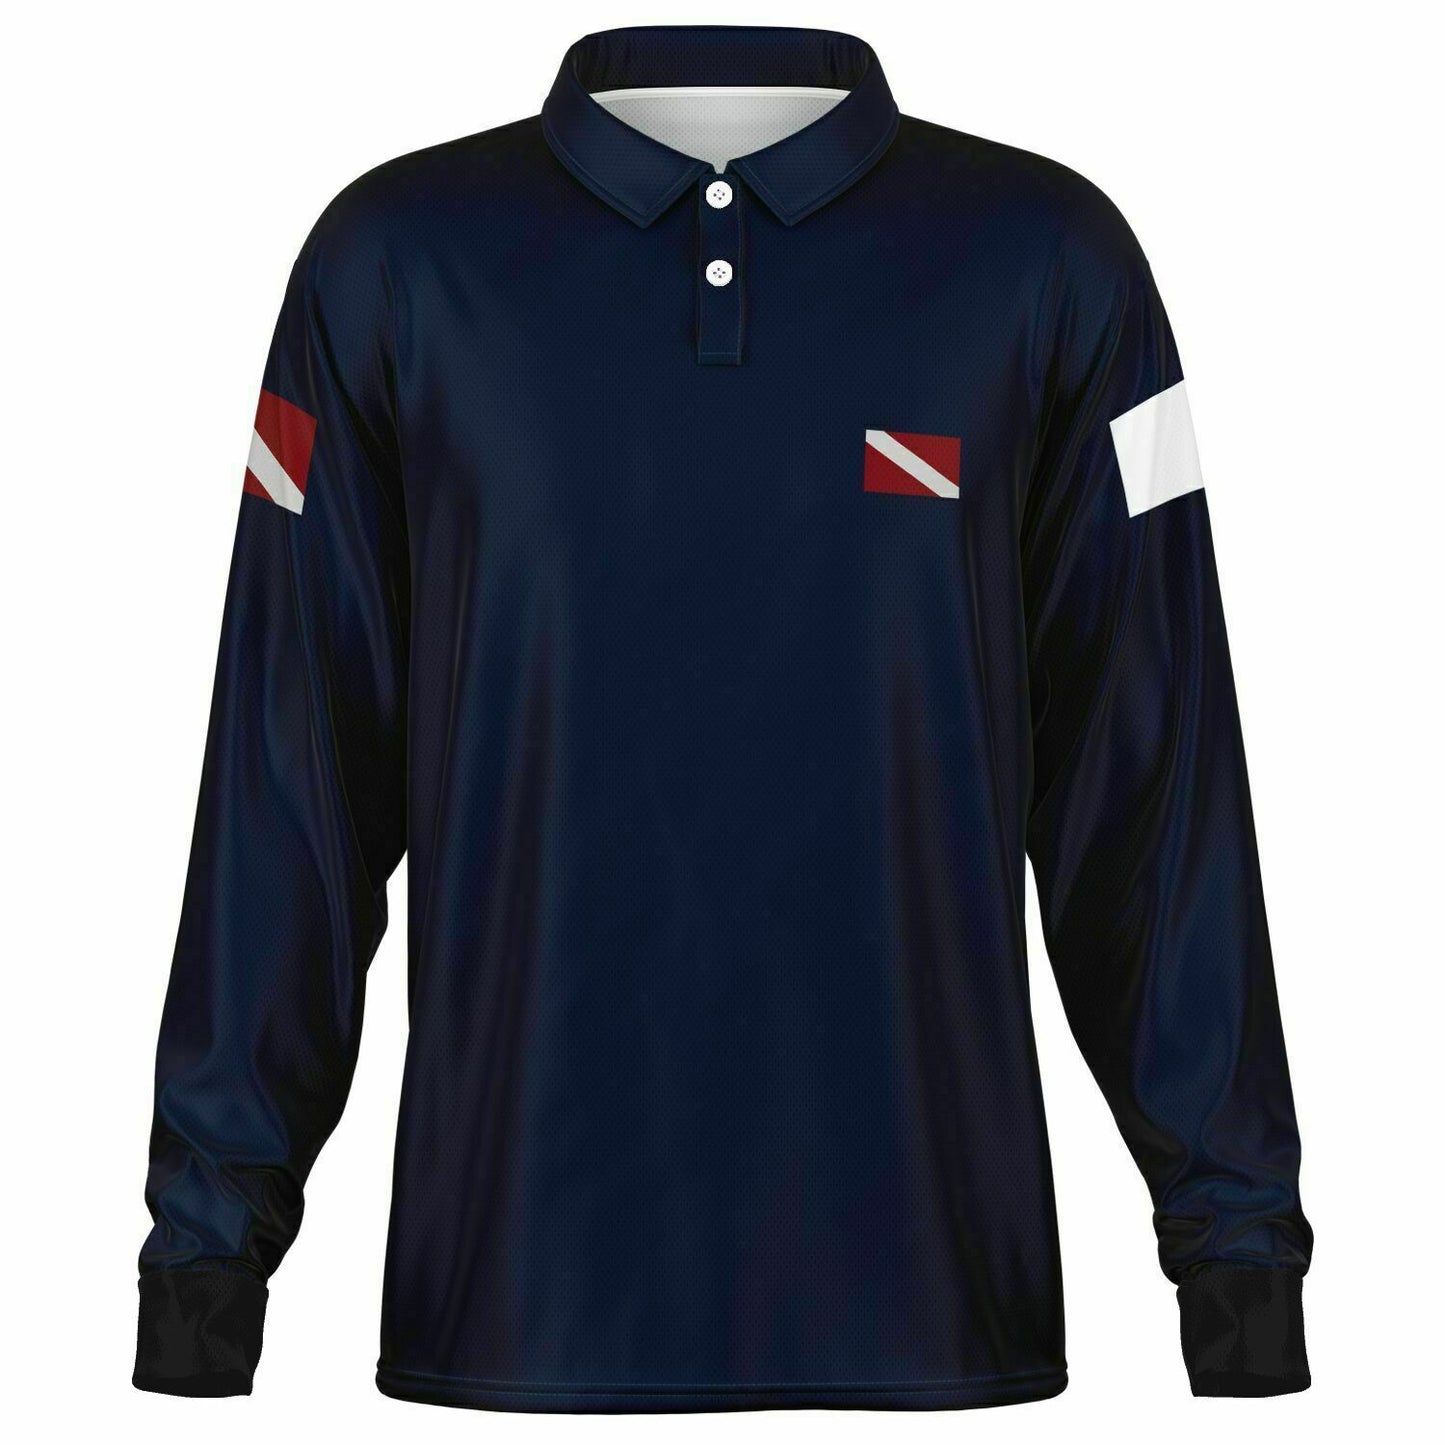 The Ocean Polo Shirt UPF 50+